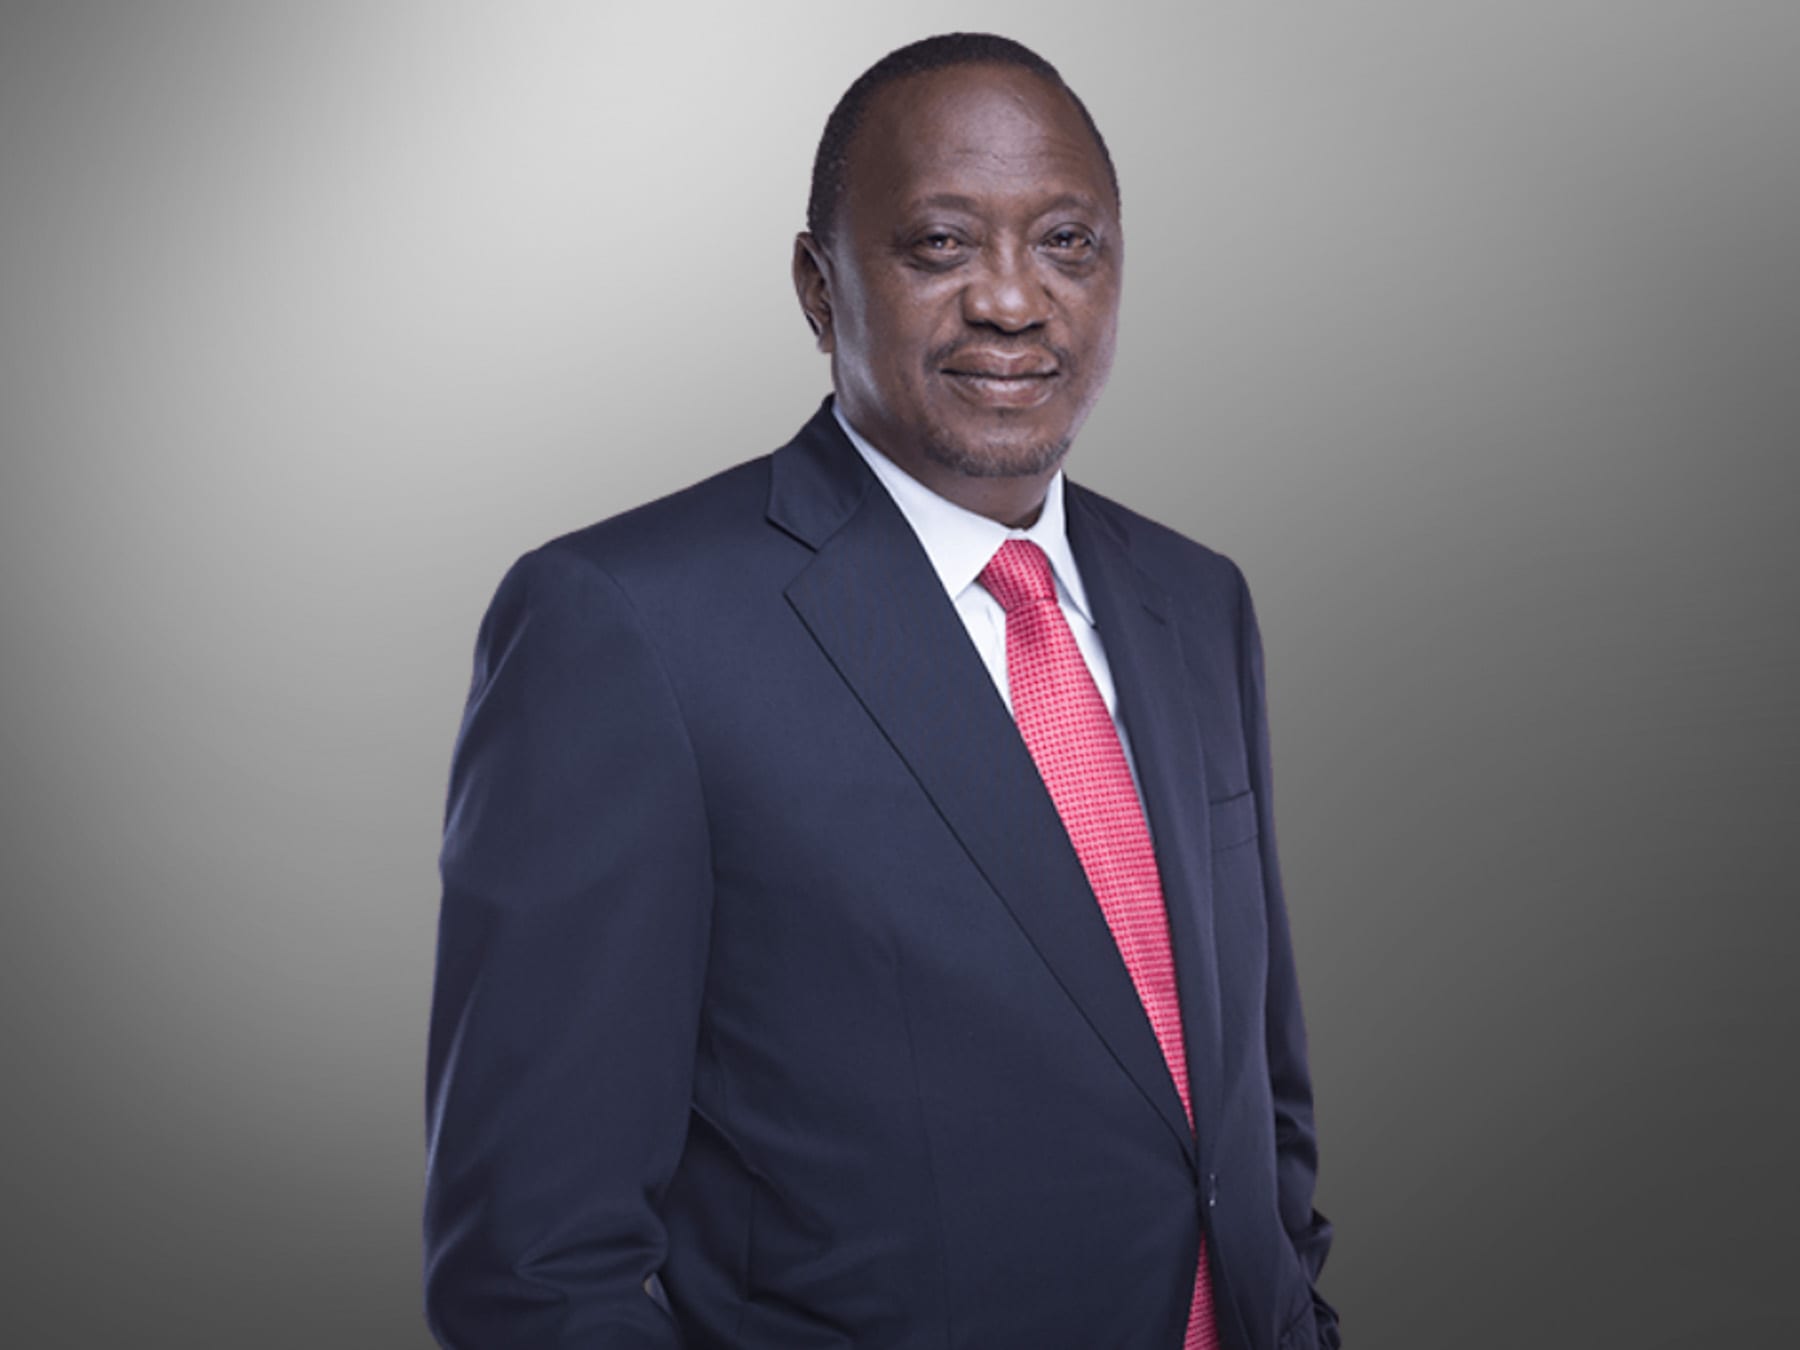 H.E. Uhuru Kenyatta, fourth President of the Republic of Kenya. Image by The Executive Office of the President (www.president.go.ke).